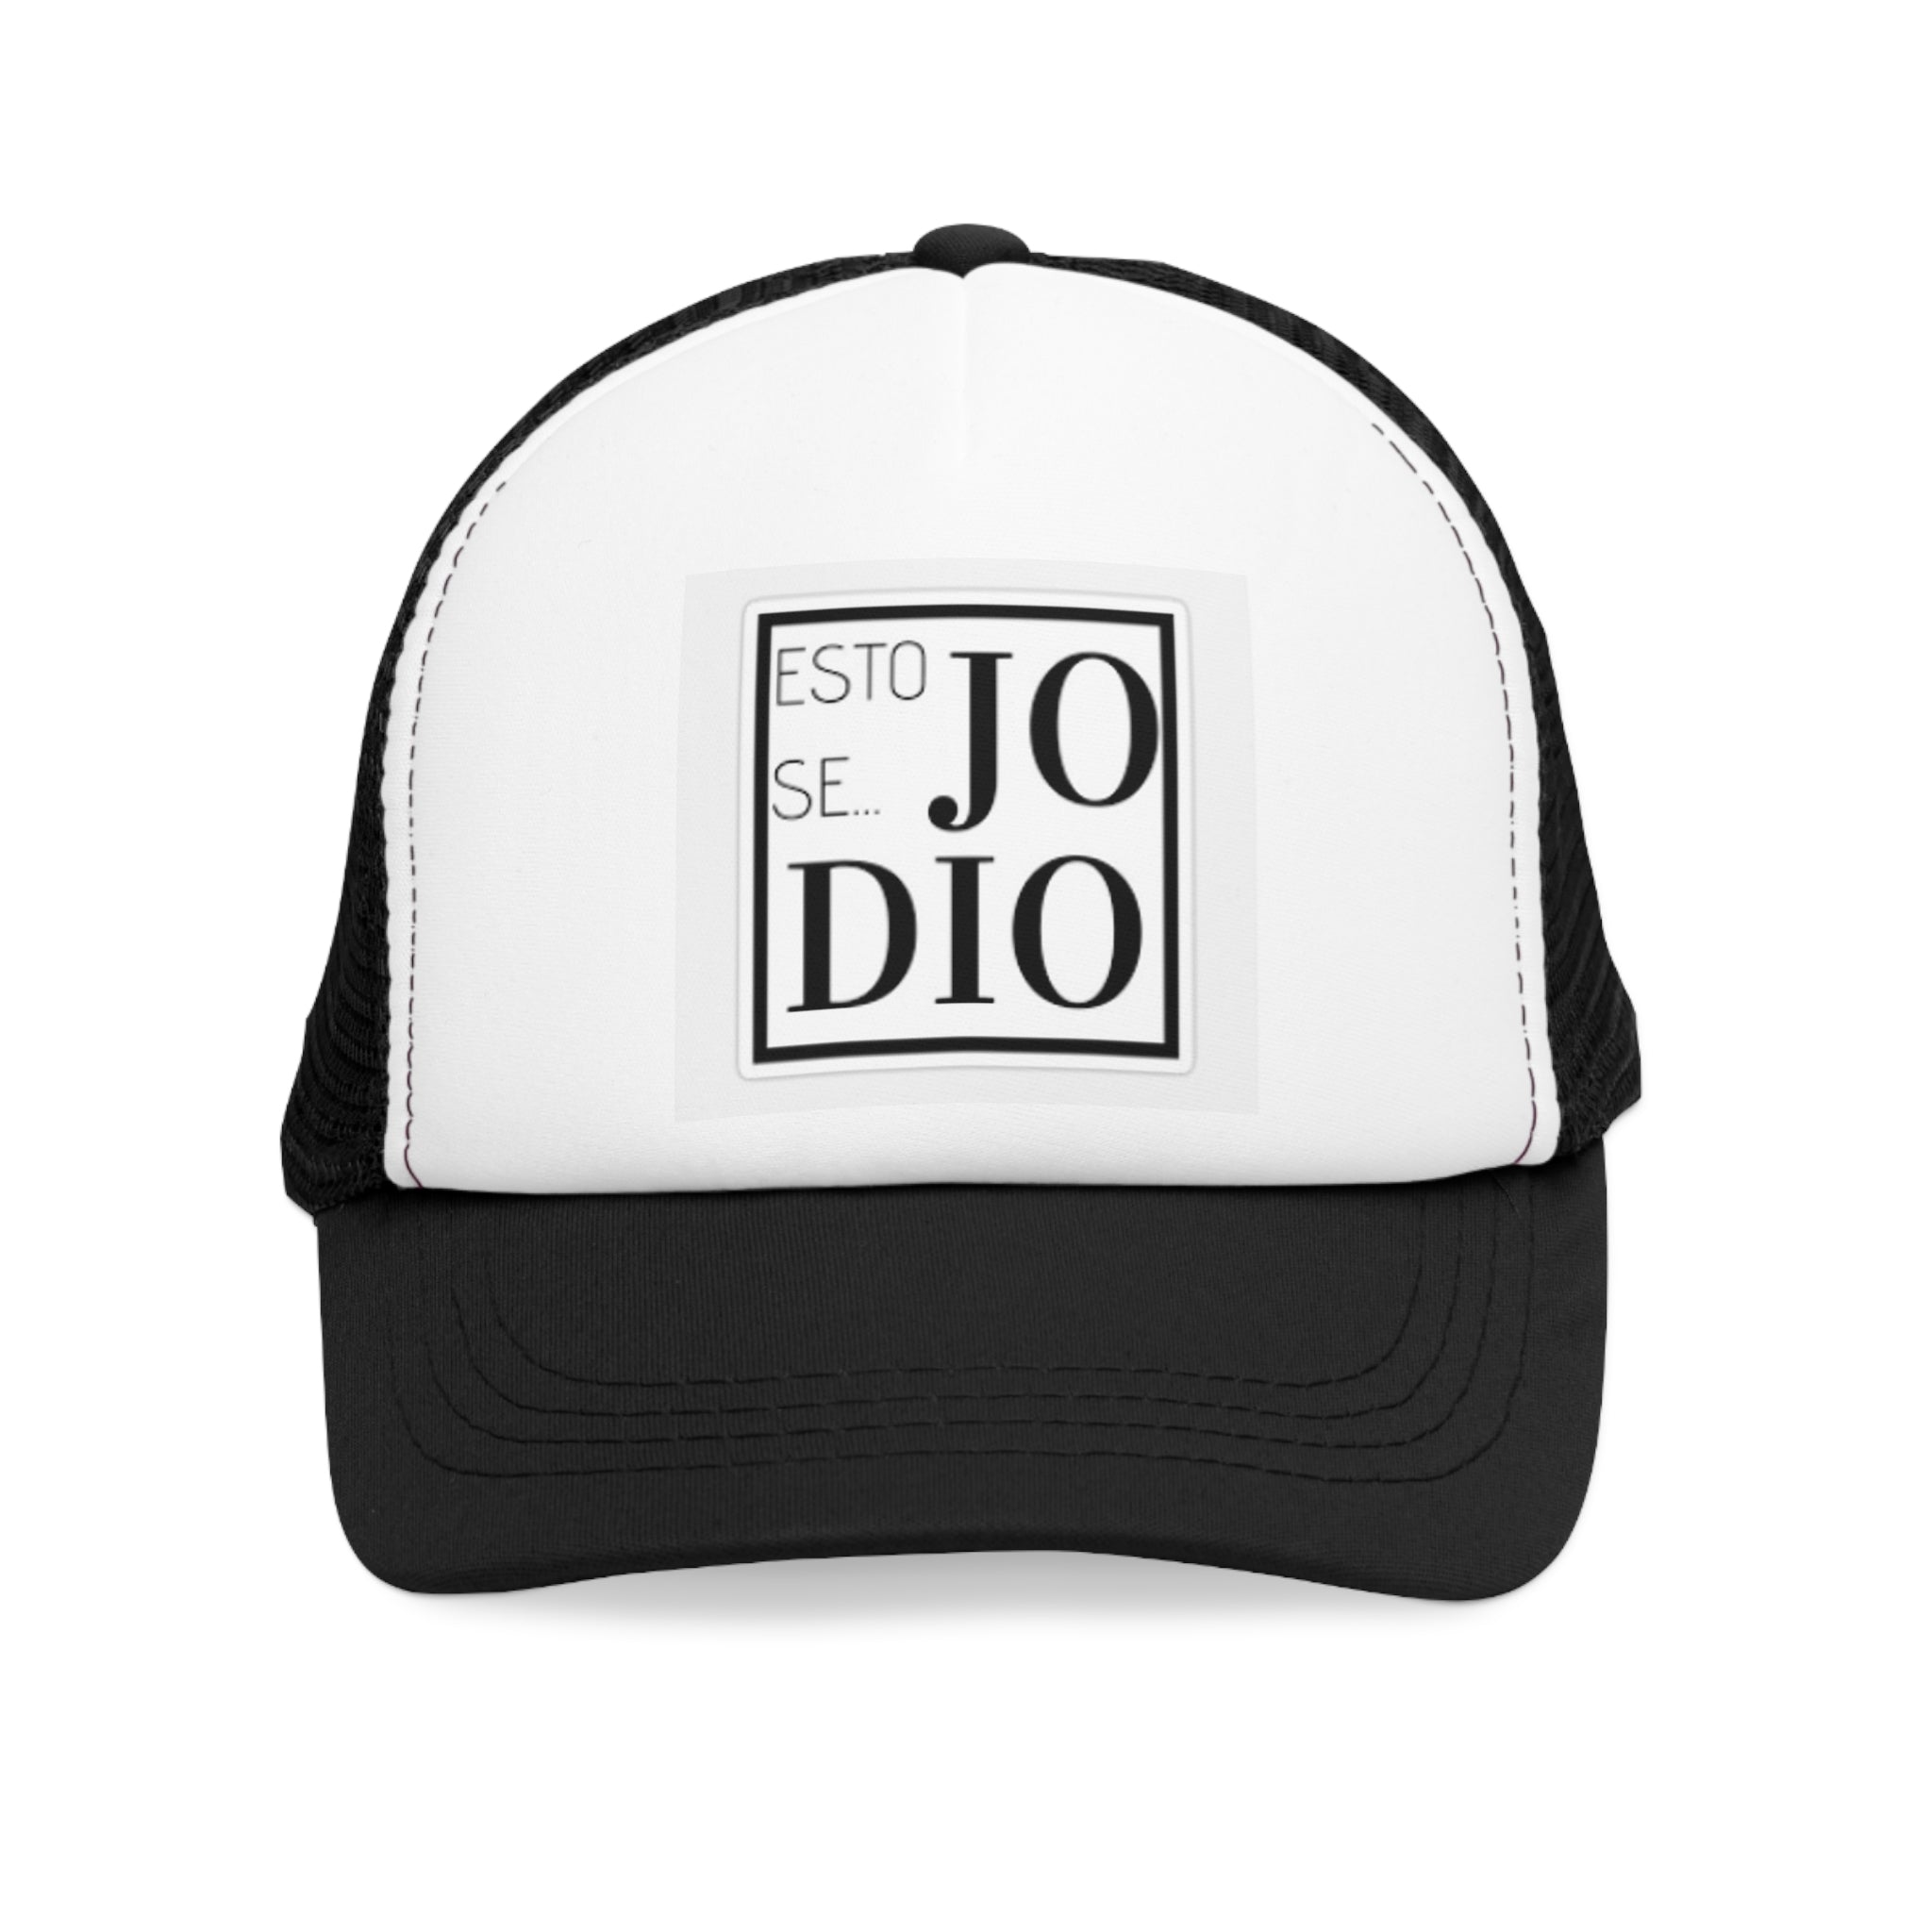 "Esto se Jodio" Trucker Hat